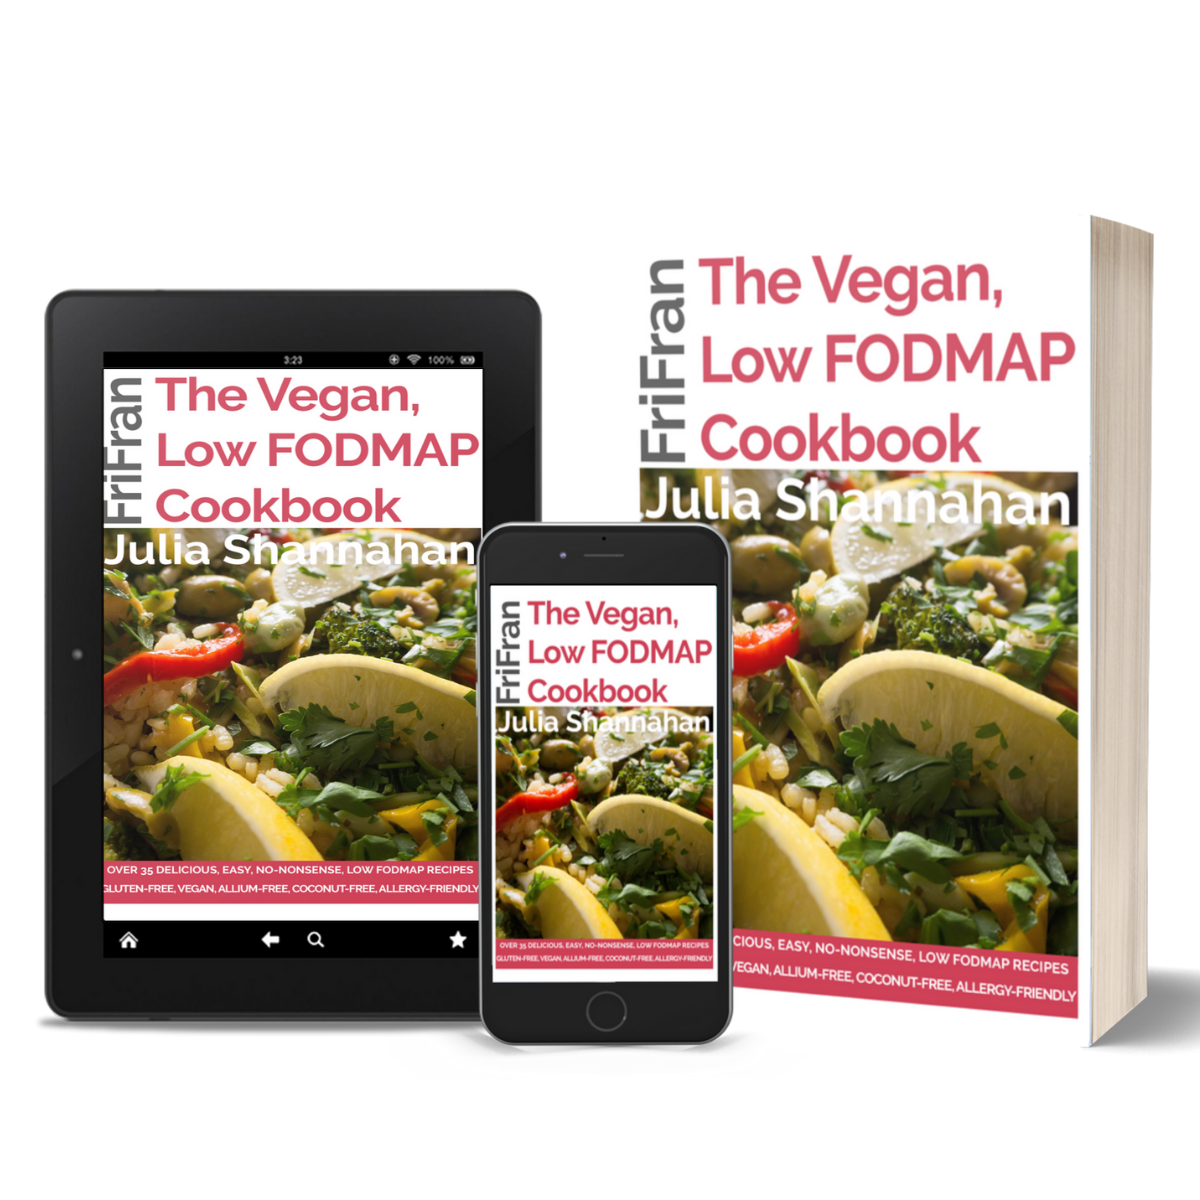 The Vegan, Low FODMAP Cookbook: No-nonsense Vegan, Low FODMAP, Gluten-Free Recipes. For Easy Low FODMAP Living #veganblog #frifran #glutenfree #vegan #coconutfree #glutenfreevegan #gfvegan